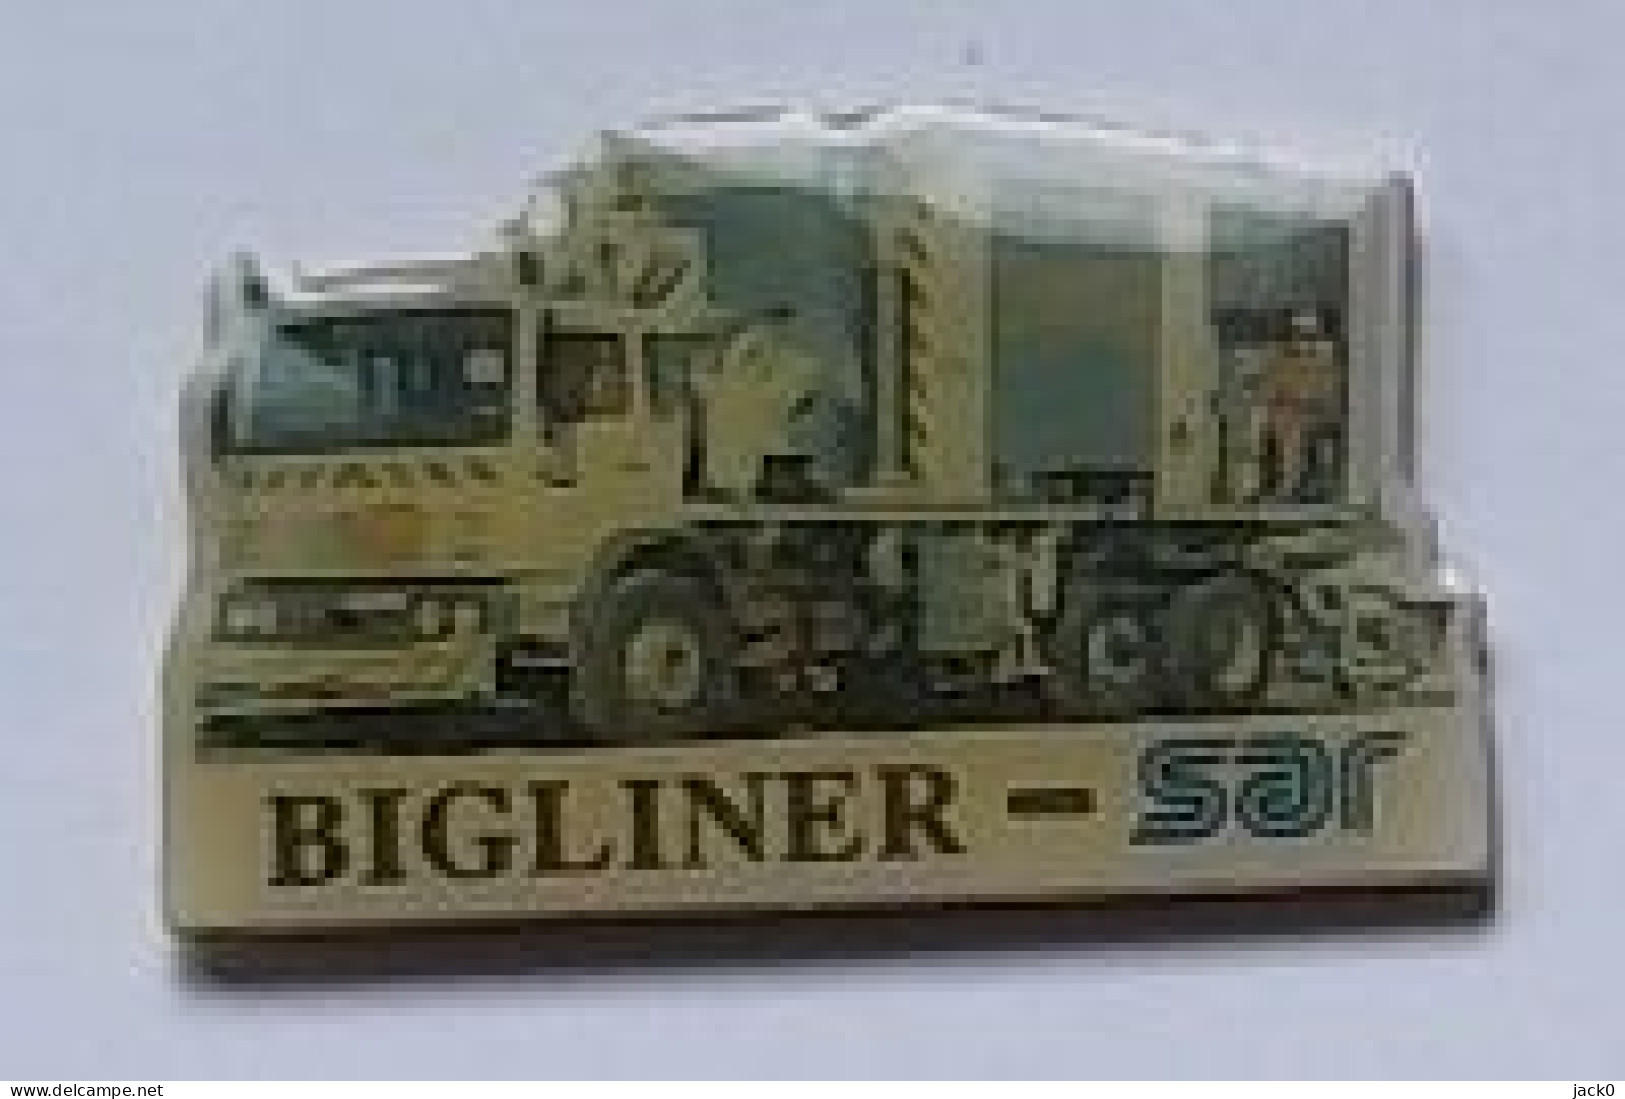 Pin' S  Transport  Camion  Blanc  B IGLINER - SAR - Transport